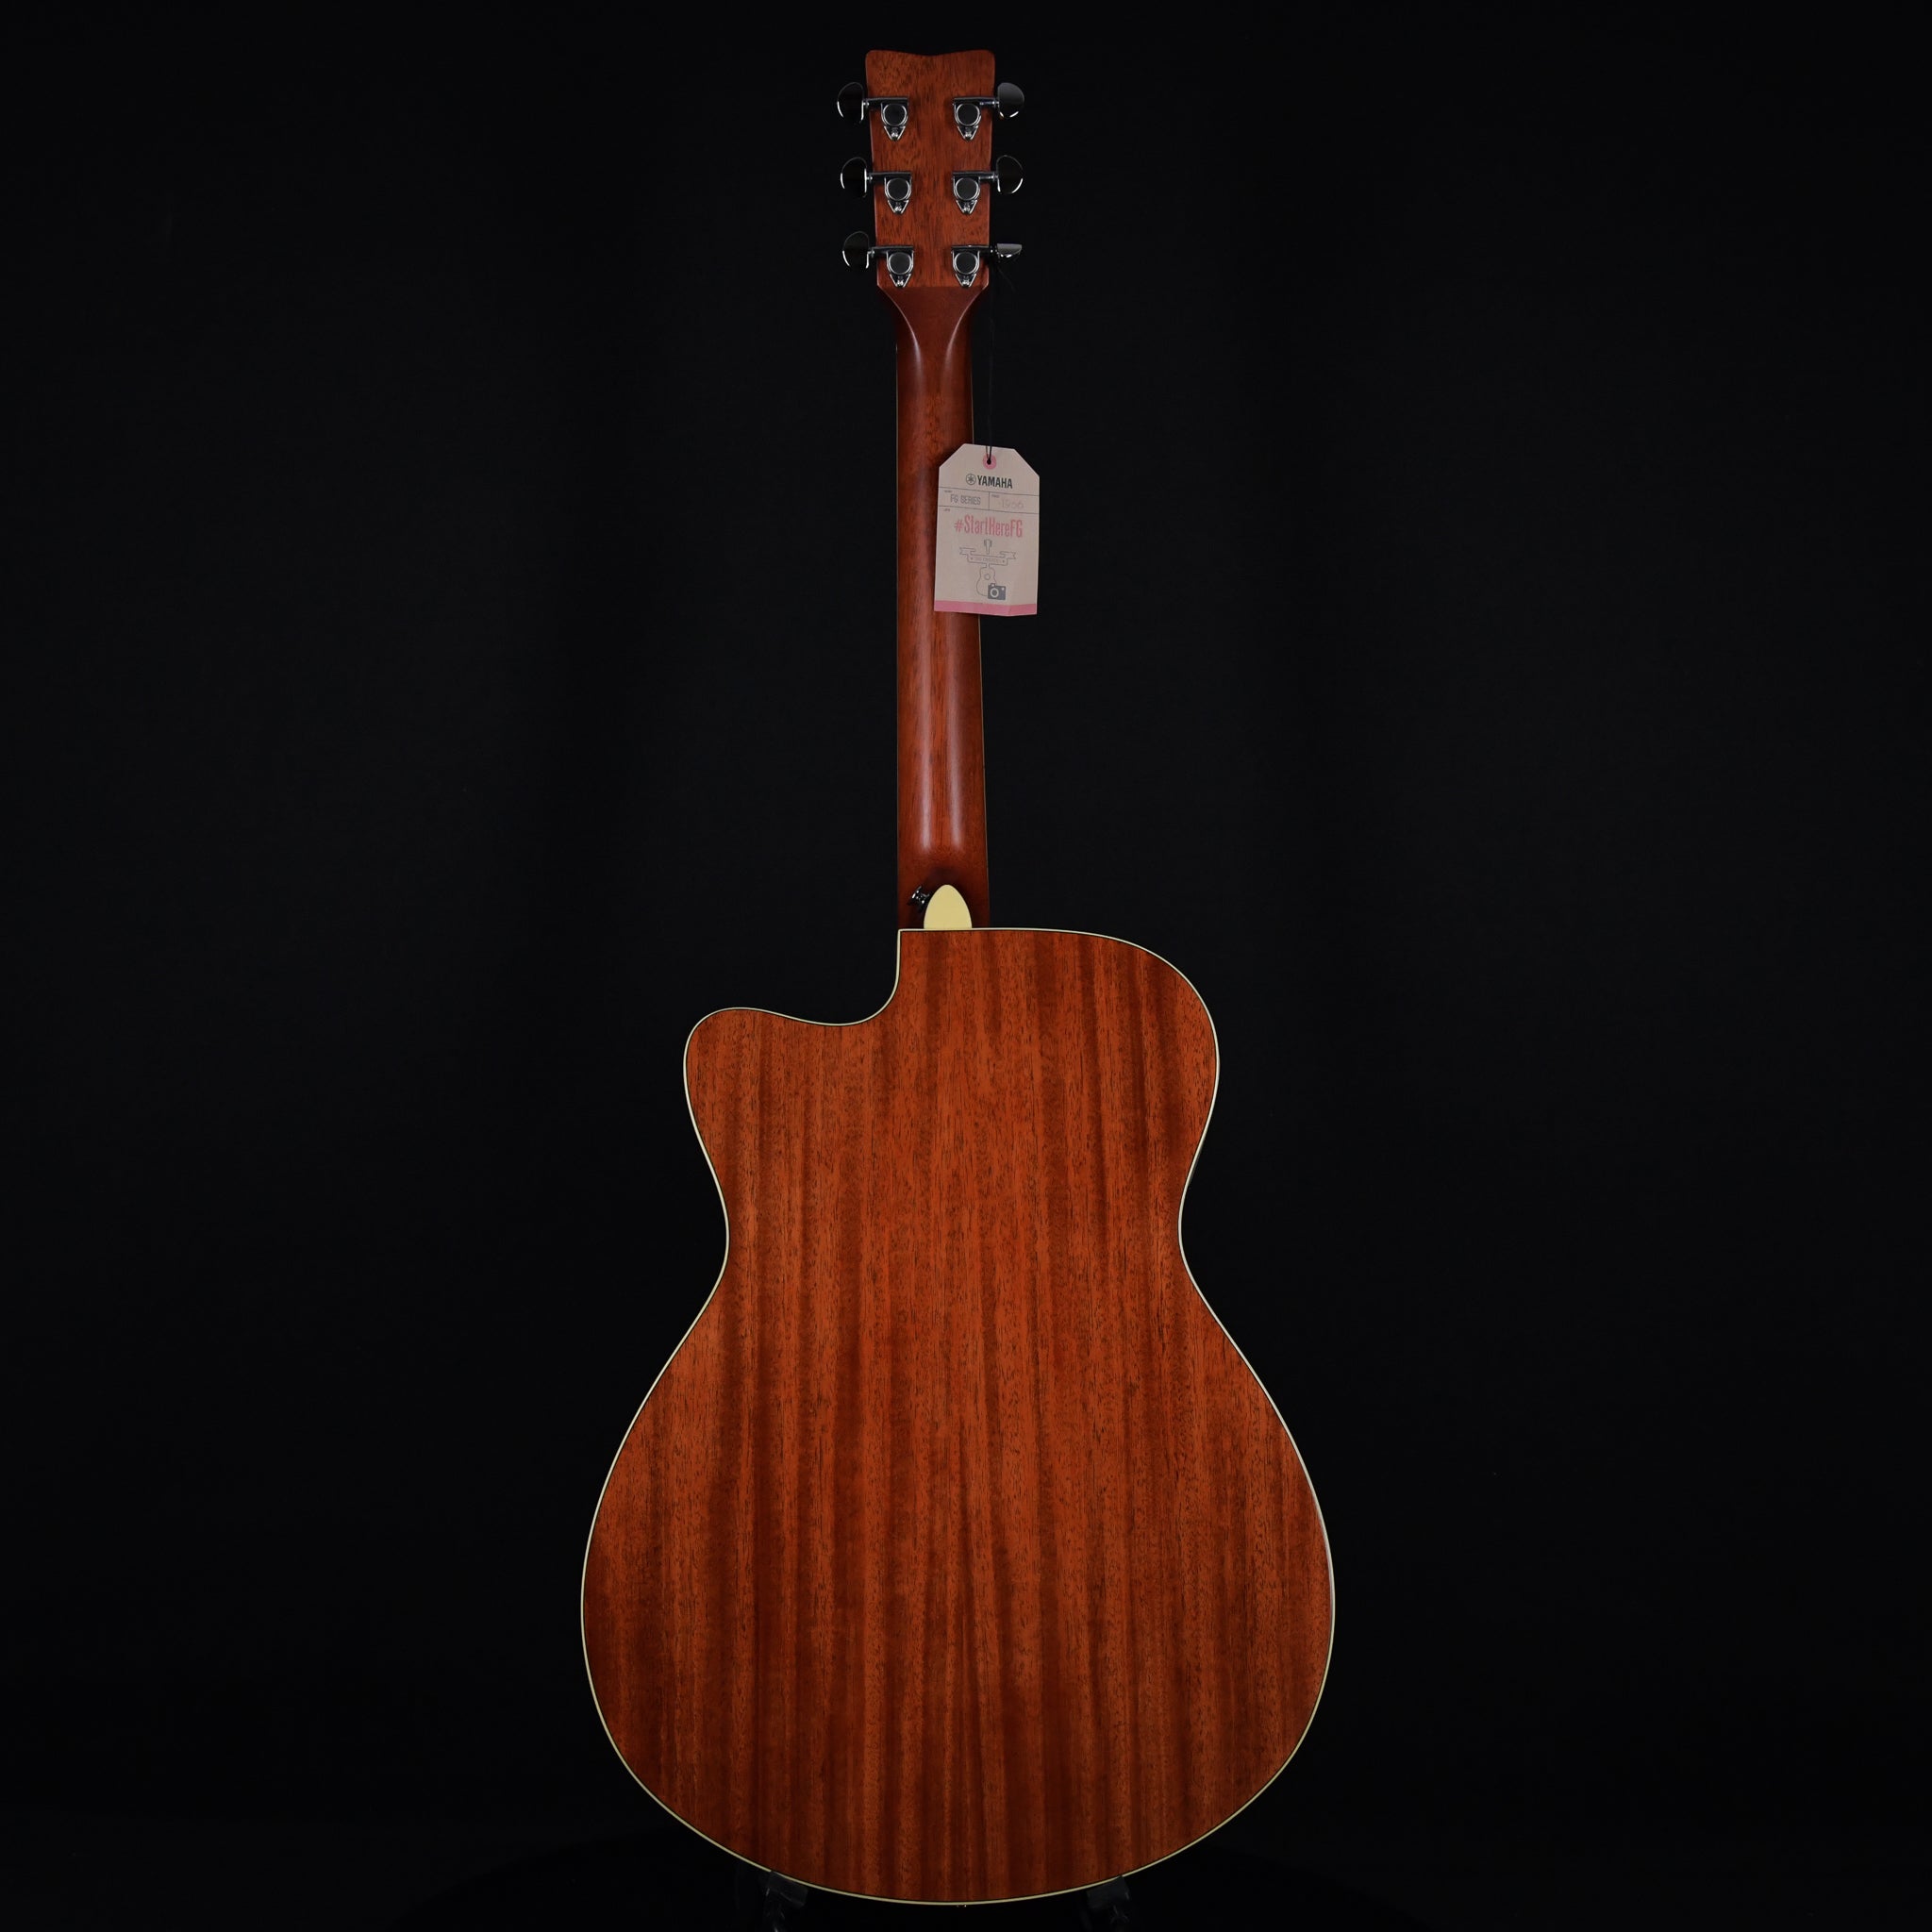 YAMAHA GC45II - Guitare classique C45 - Exclusivité Cultura